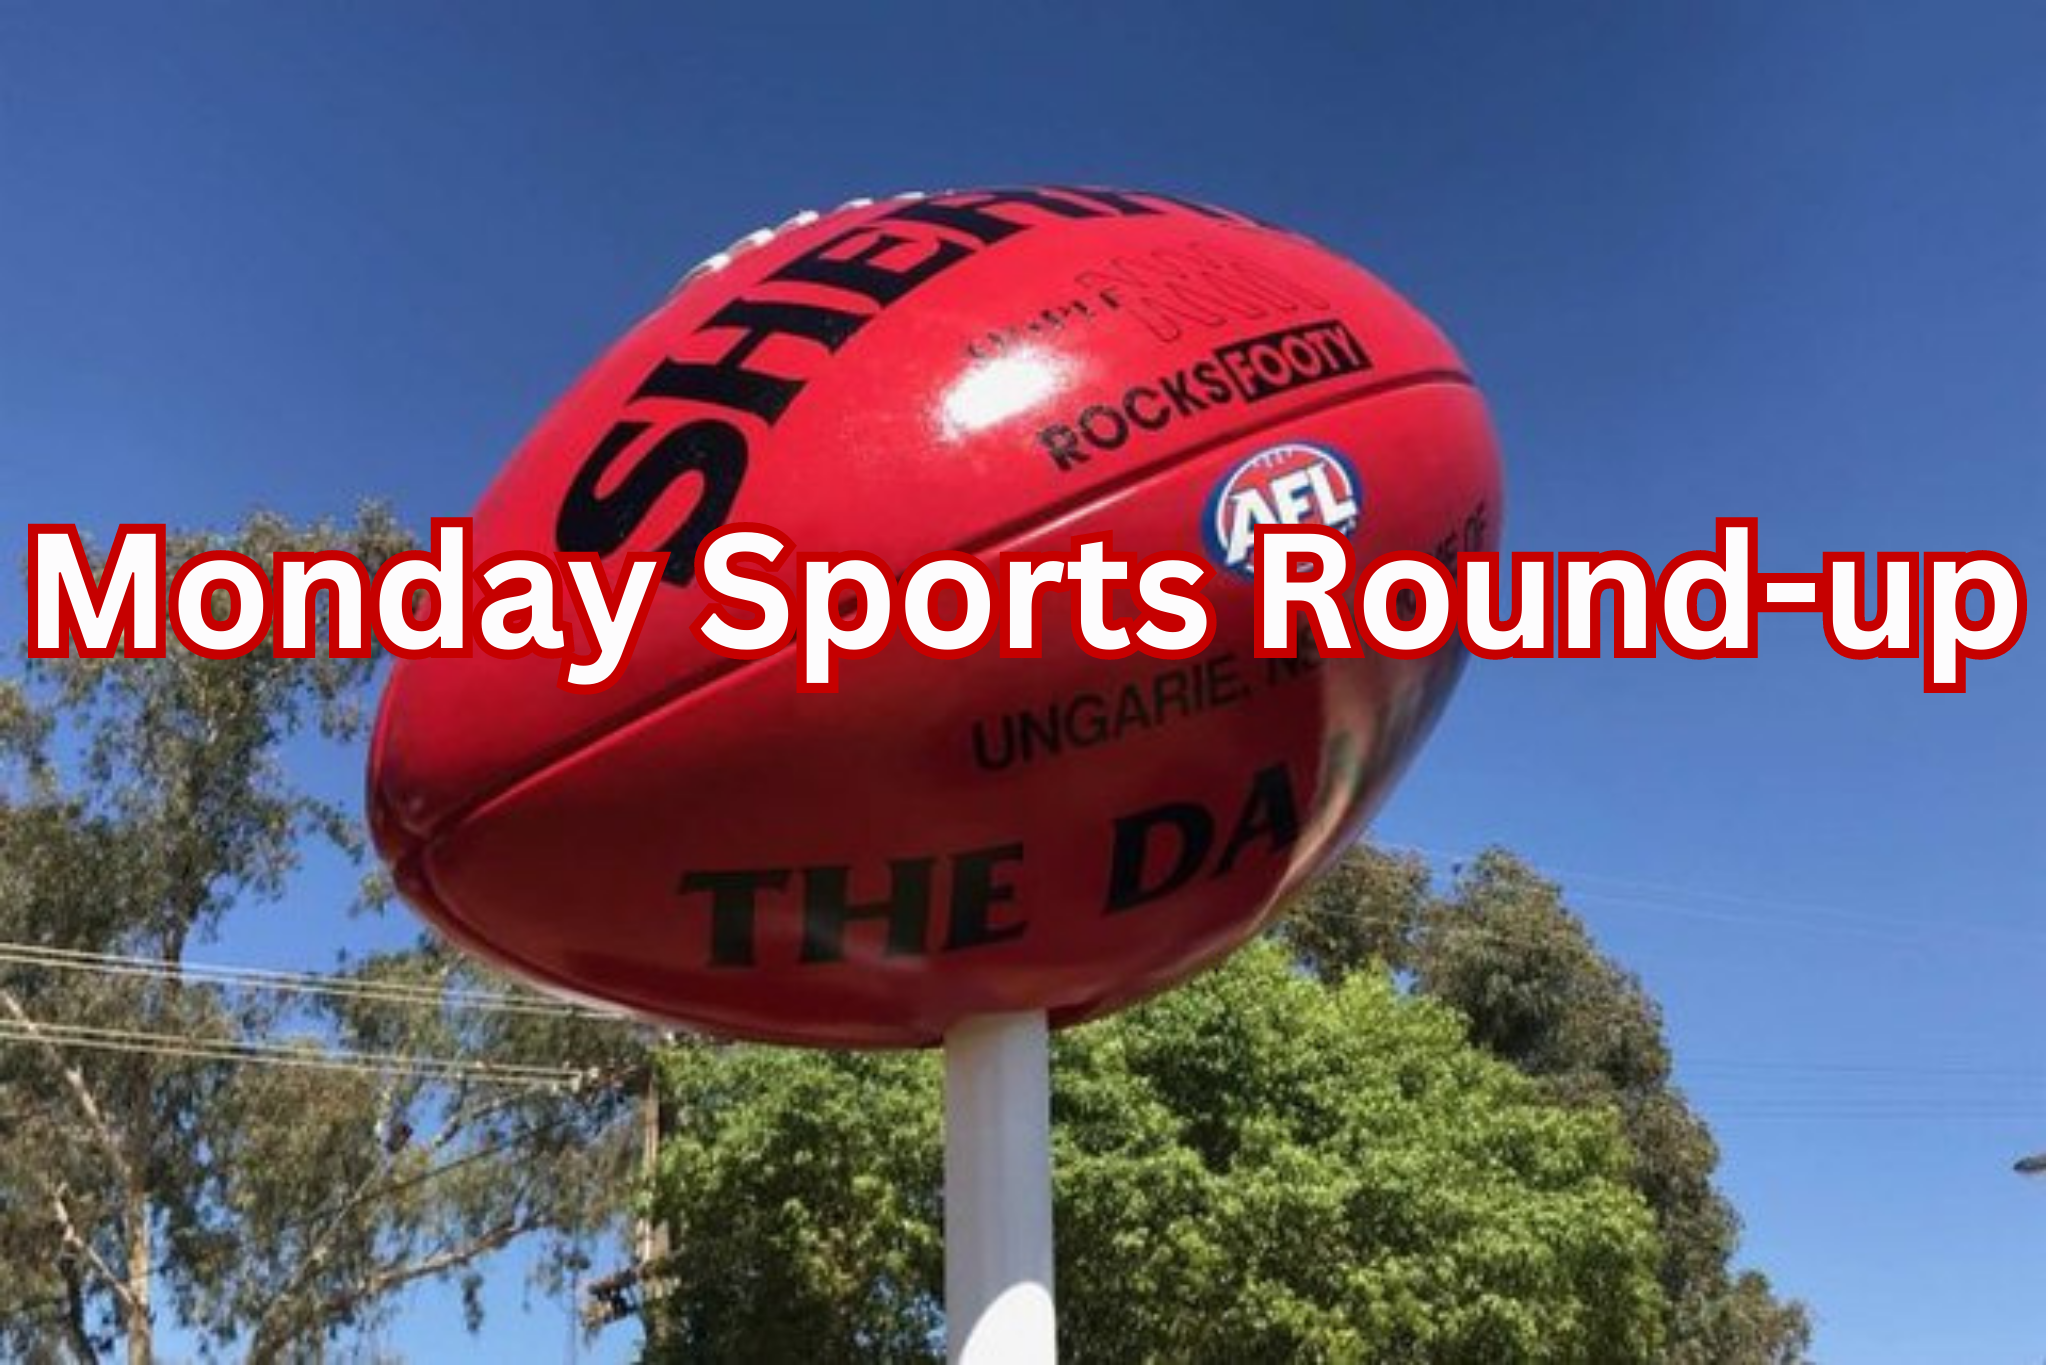 Monday sports round-up